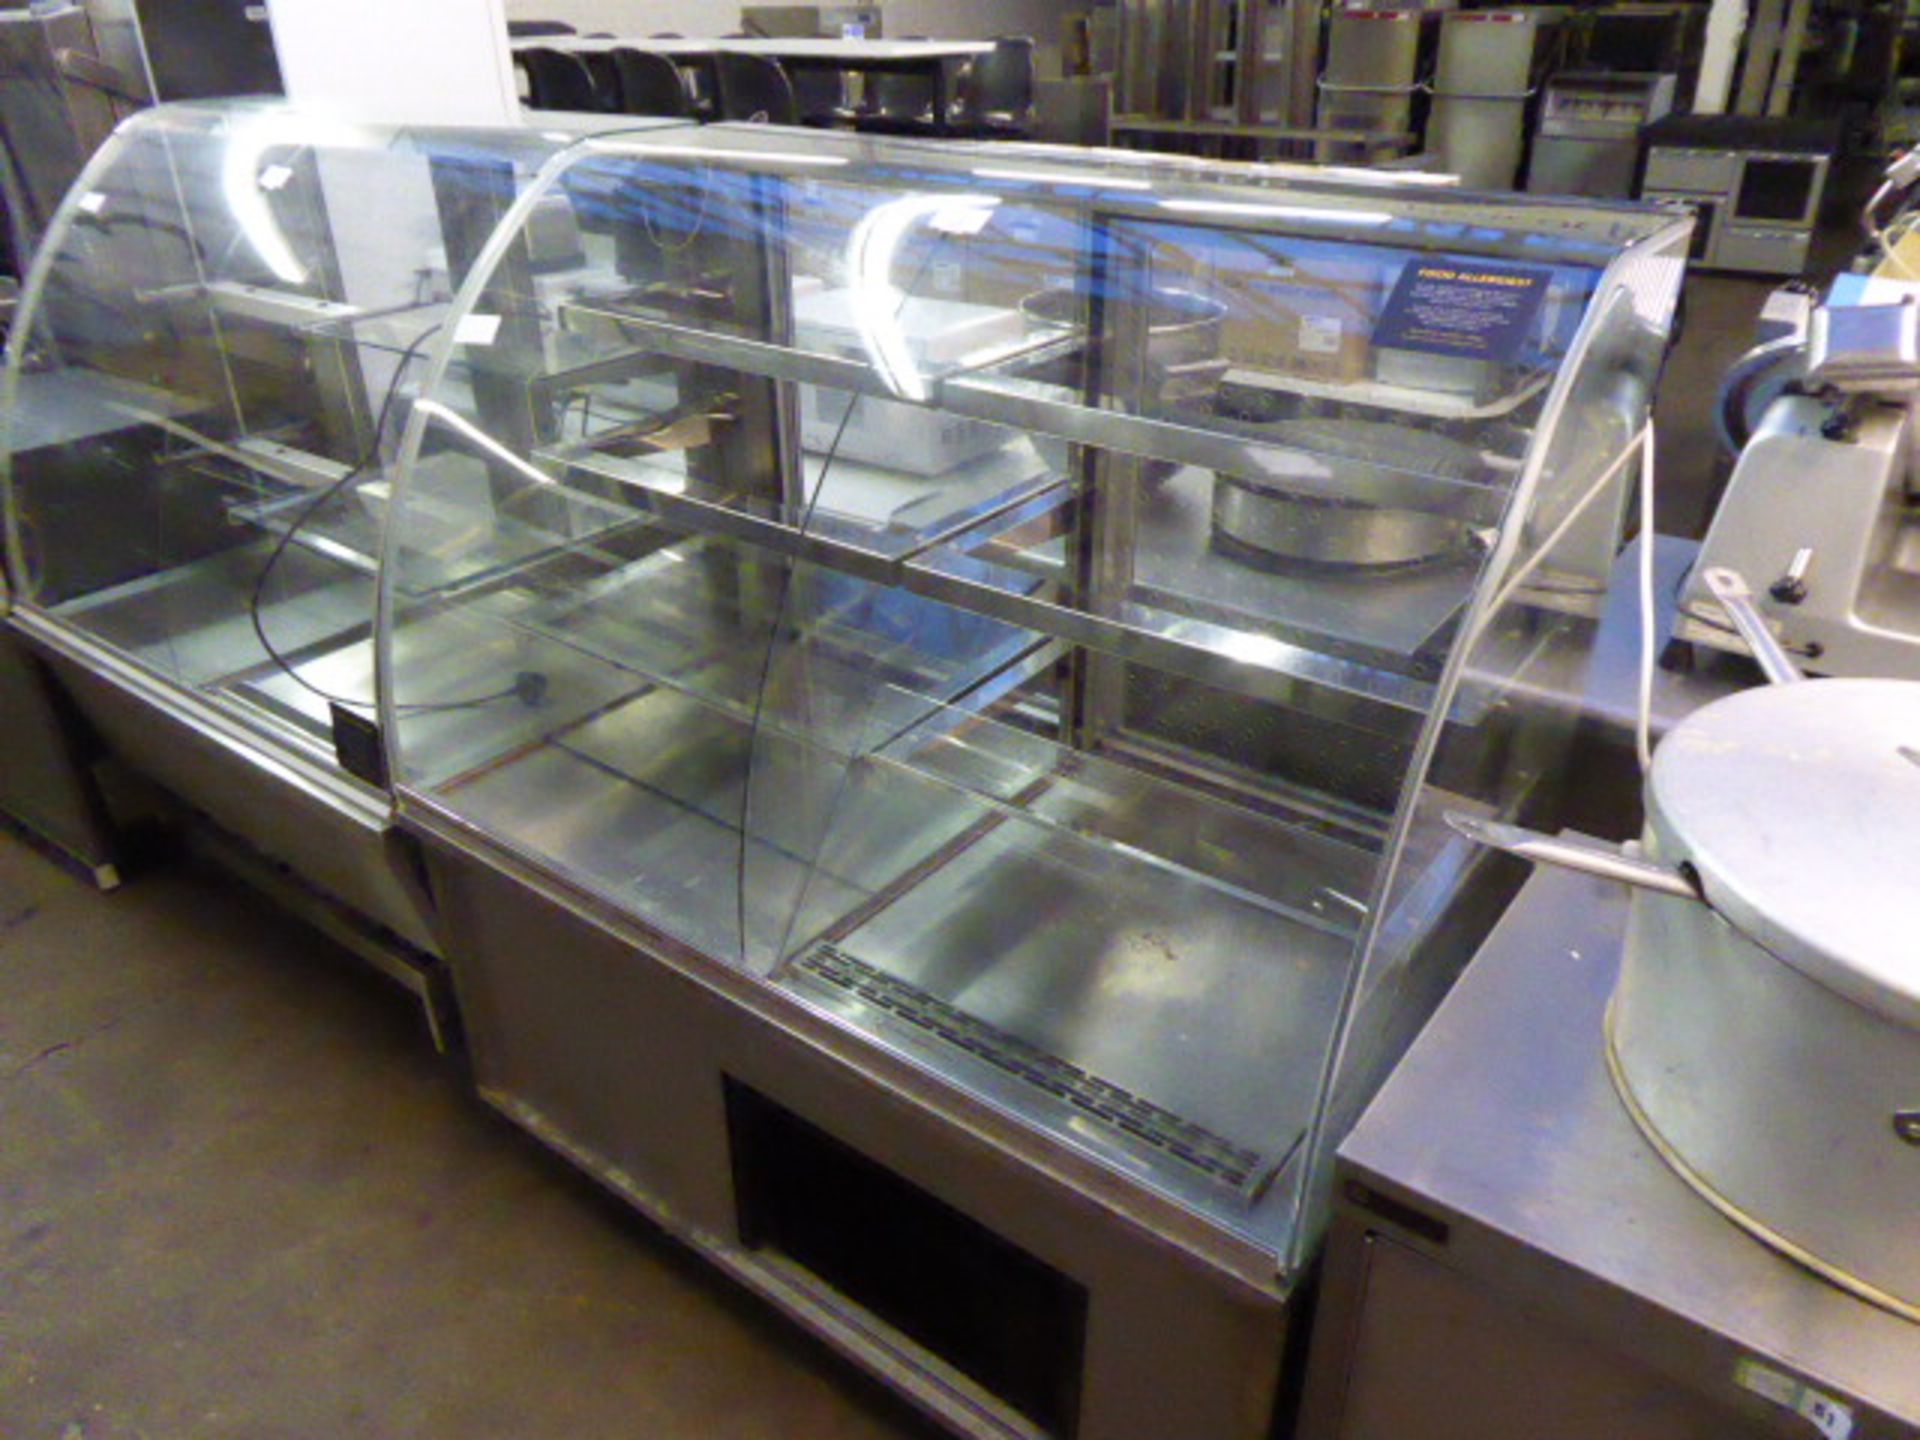 30cm Delfield Enodis refrigerated serve over display cabinet - 16